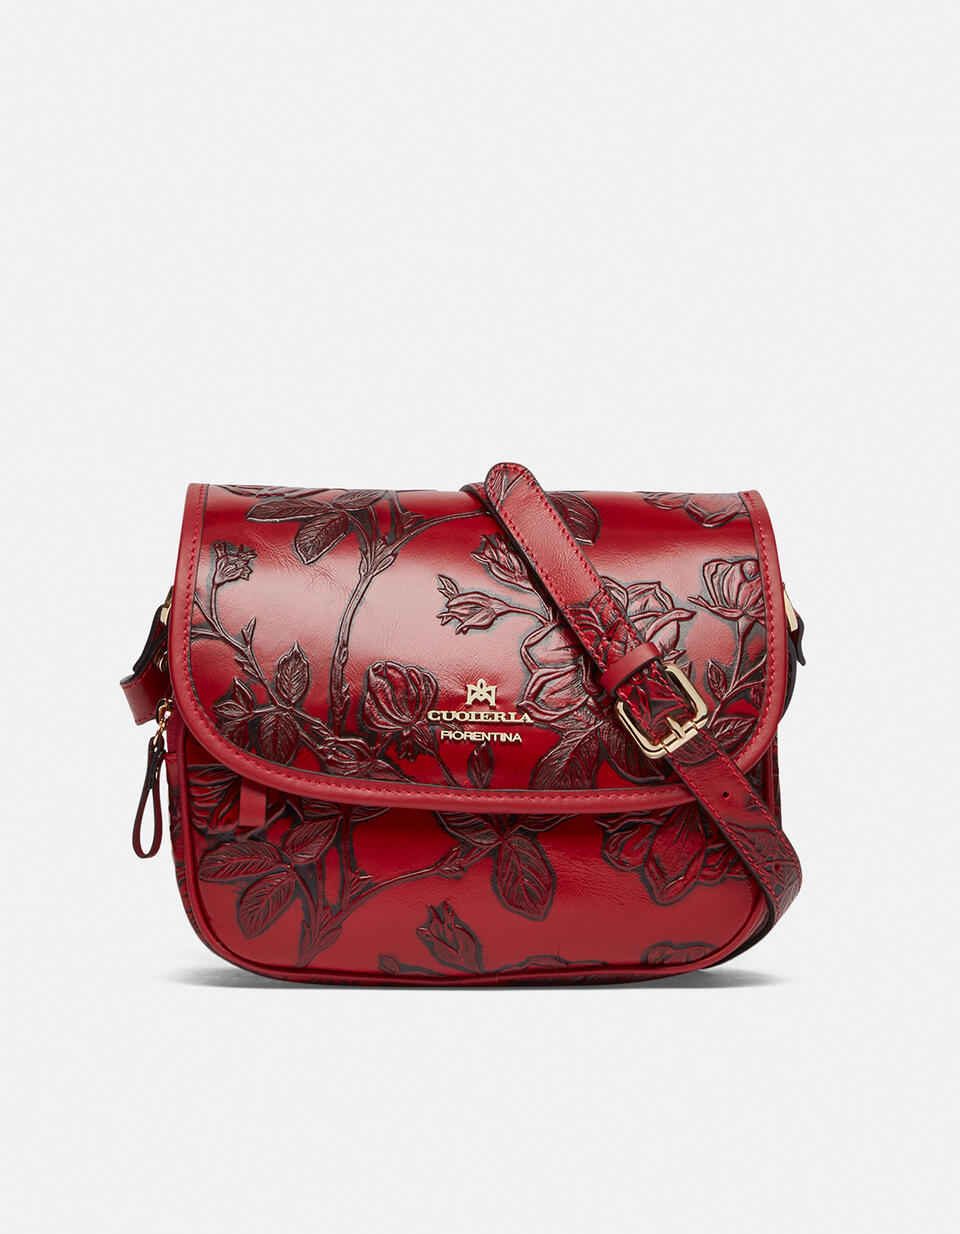 Messenger bag in rose embossed printed calfleather - Messenger Bags - WOMEN'S BAGS | bags ROSSO - Messenger Bags - WOMEN'S BAGS | bagsCuoieria Fiorentina